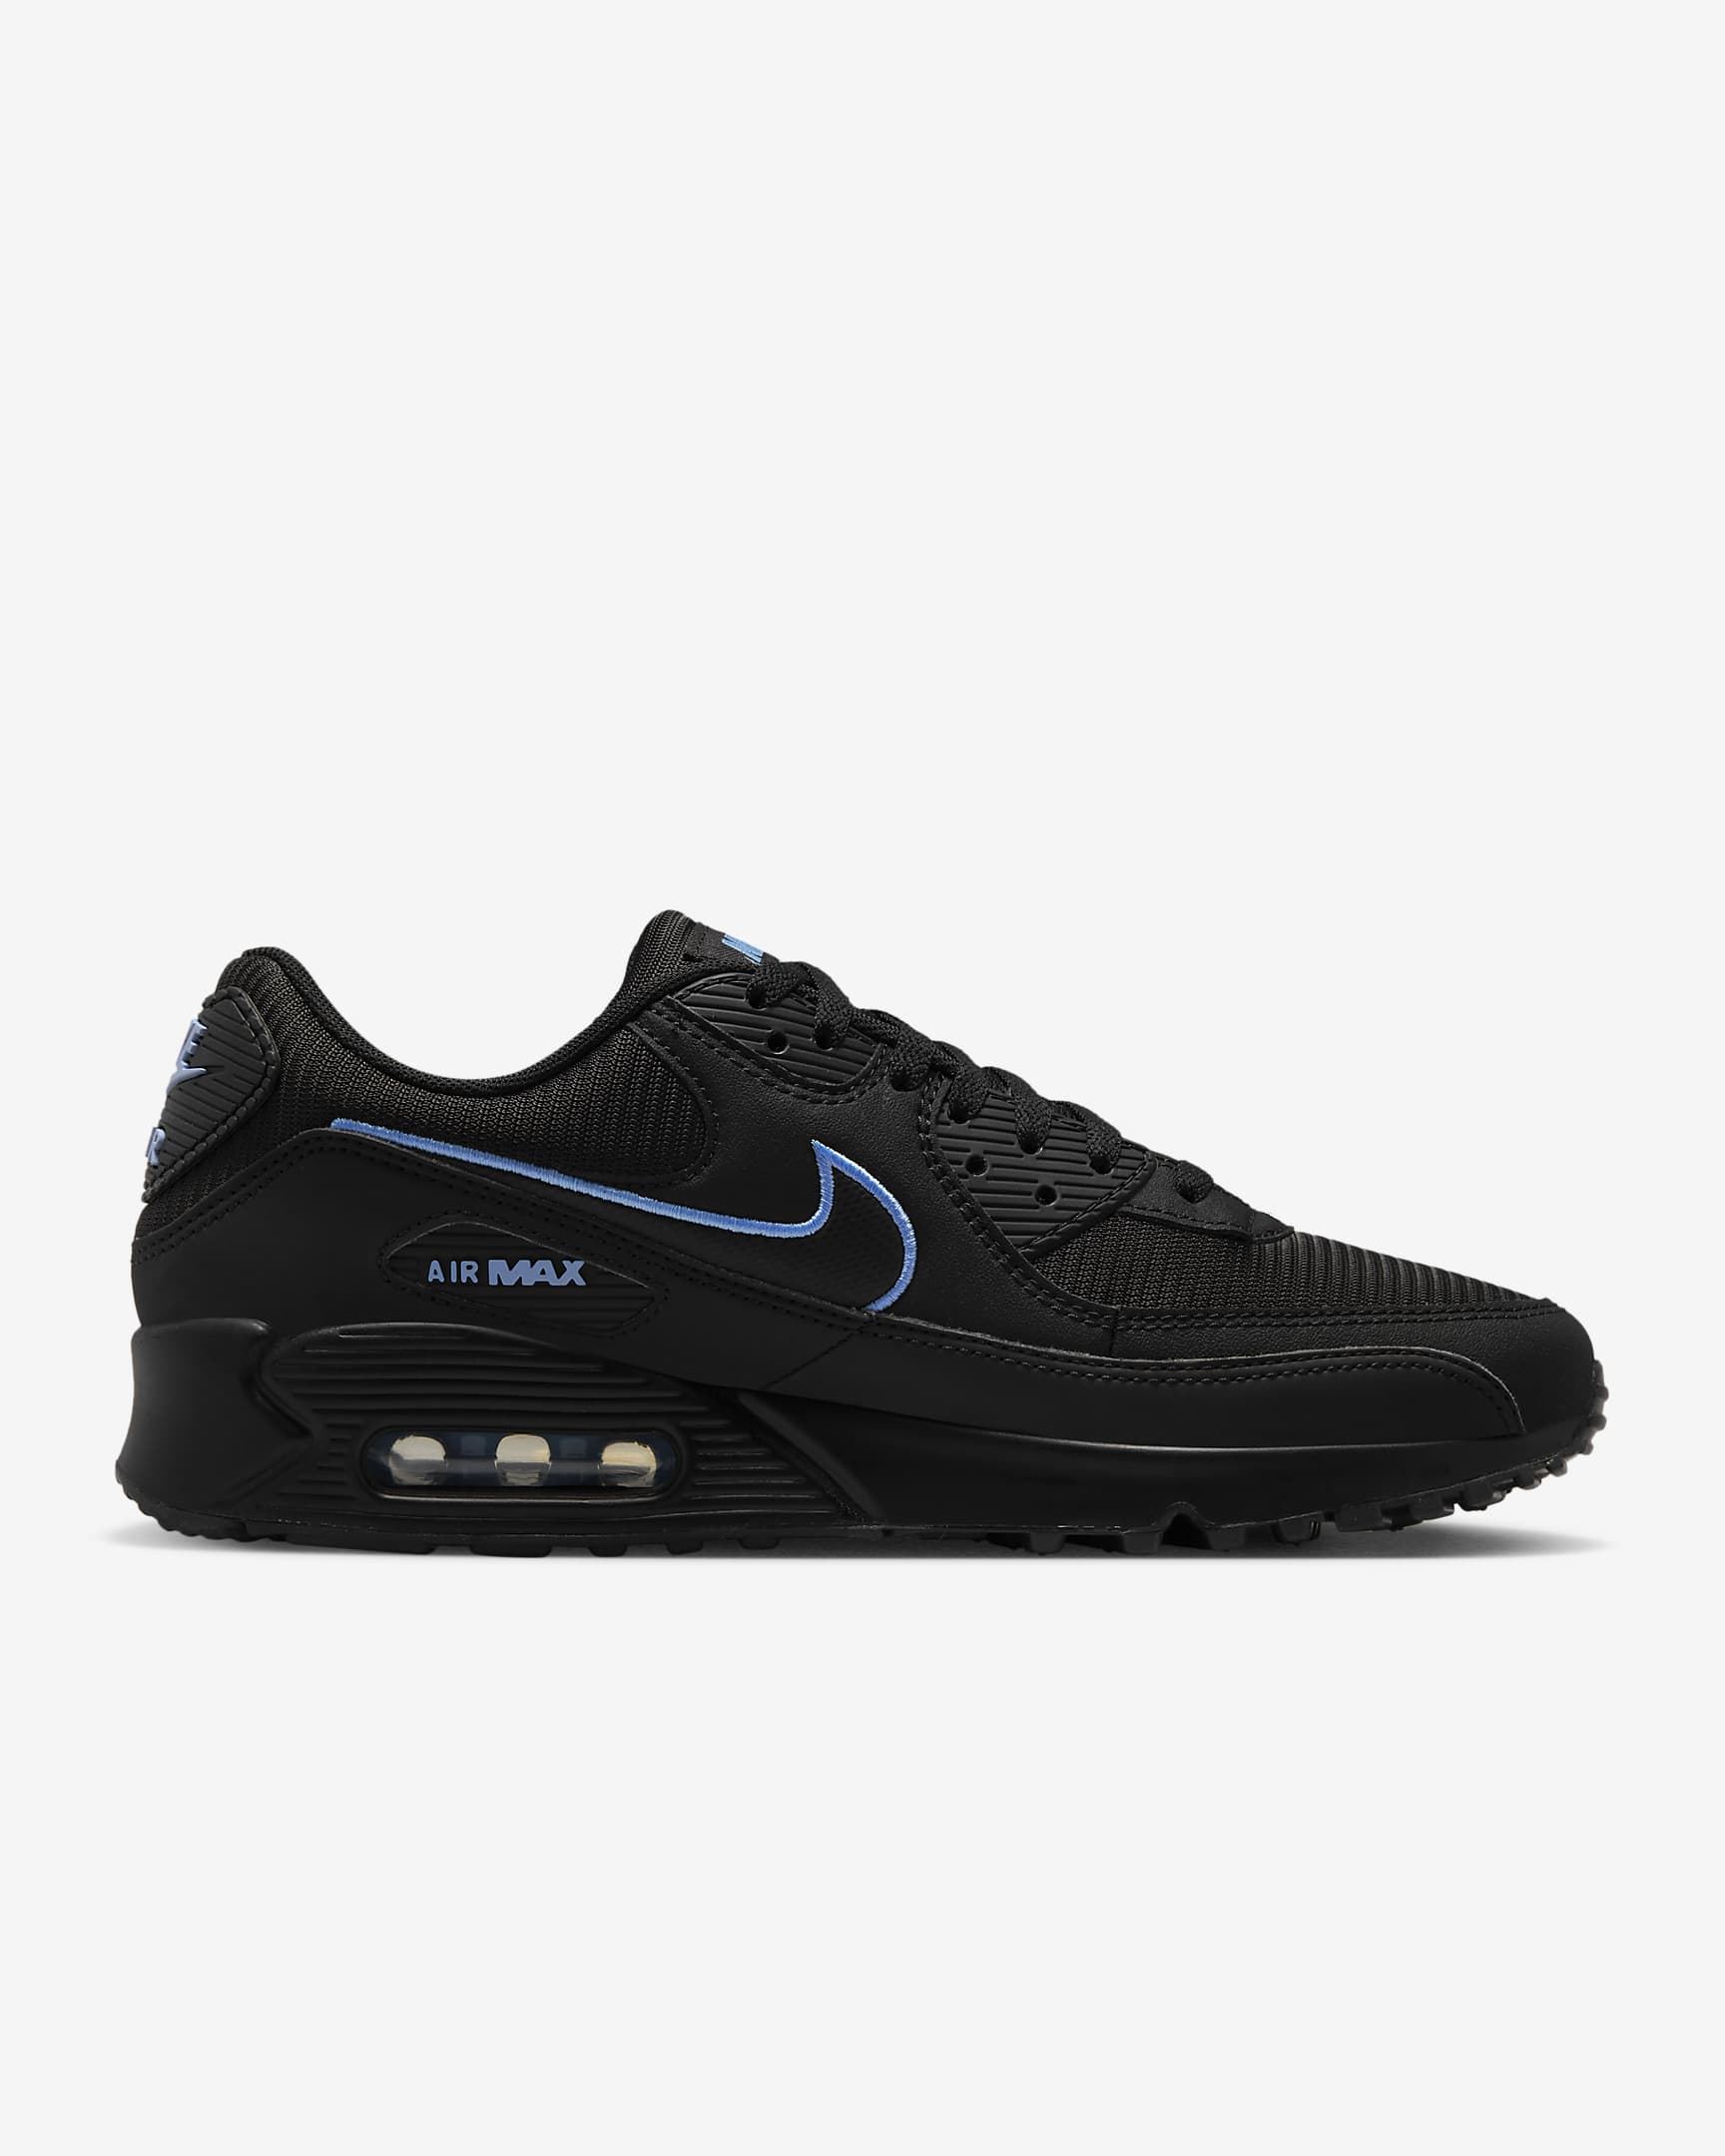 Nike Air Max 90 Men's Shoes - Black/University Blue